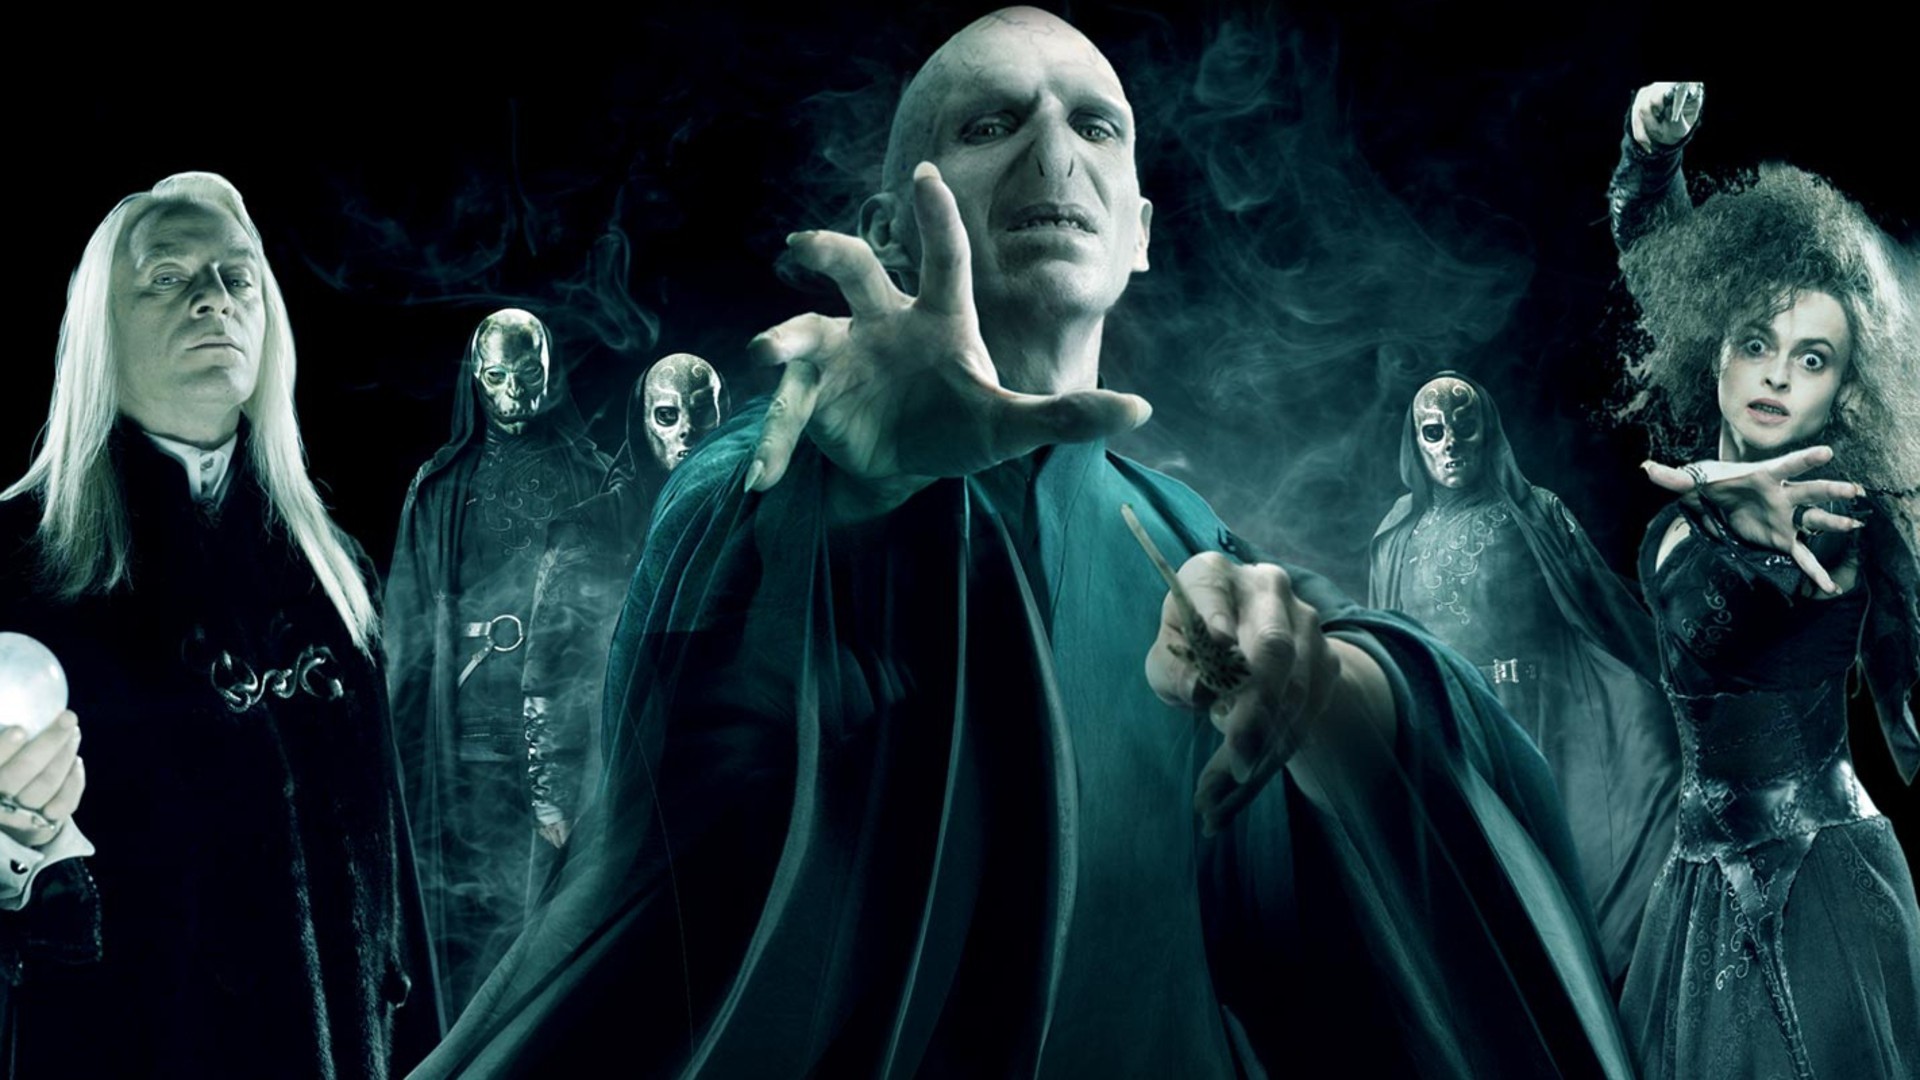 People 1920x1080 Harry Potter Lord Voldemort Bellatrix Lestrange movies wizard